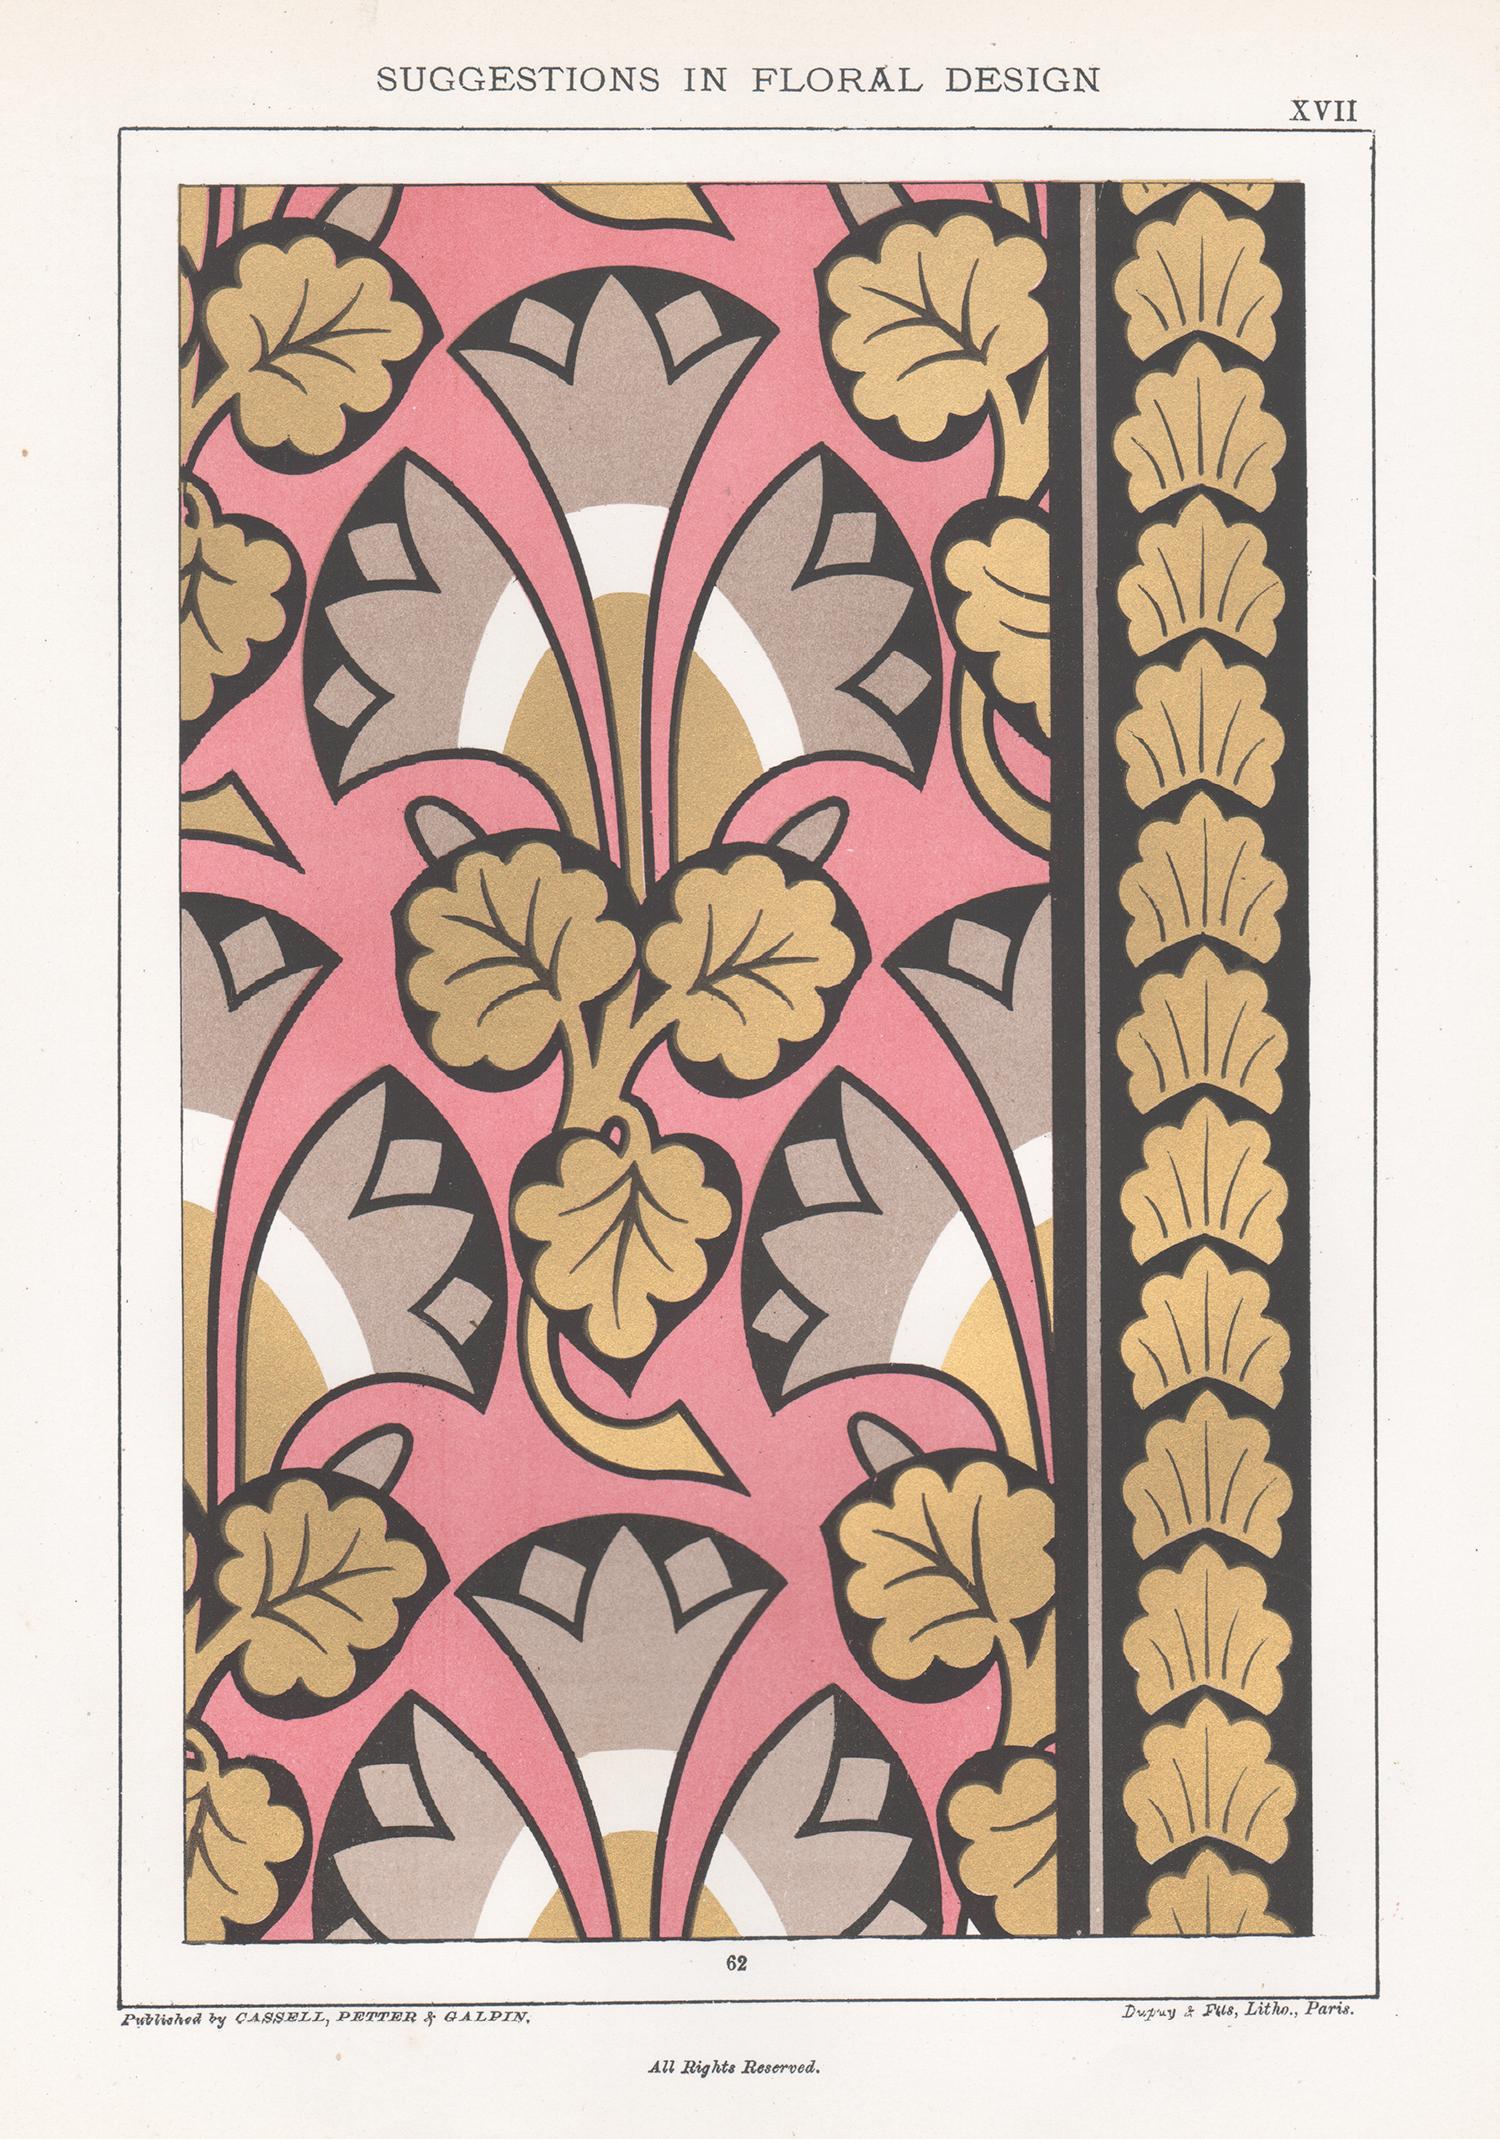 Interior Print Frederick William Hulme - Suggestions en matière d'am designs, Frederick Hulme, chromolithographie du 19e siècle